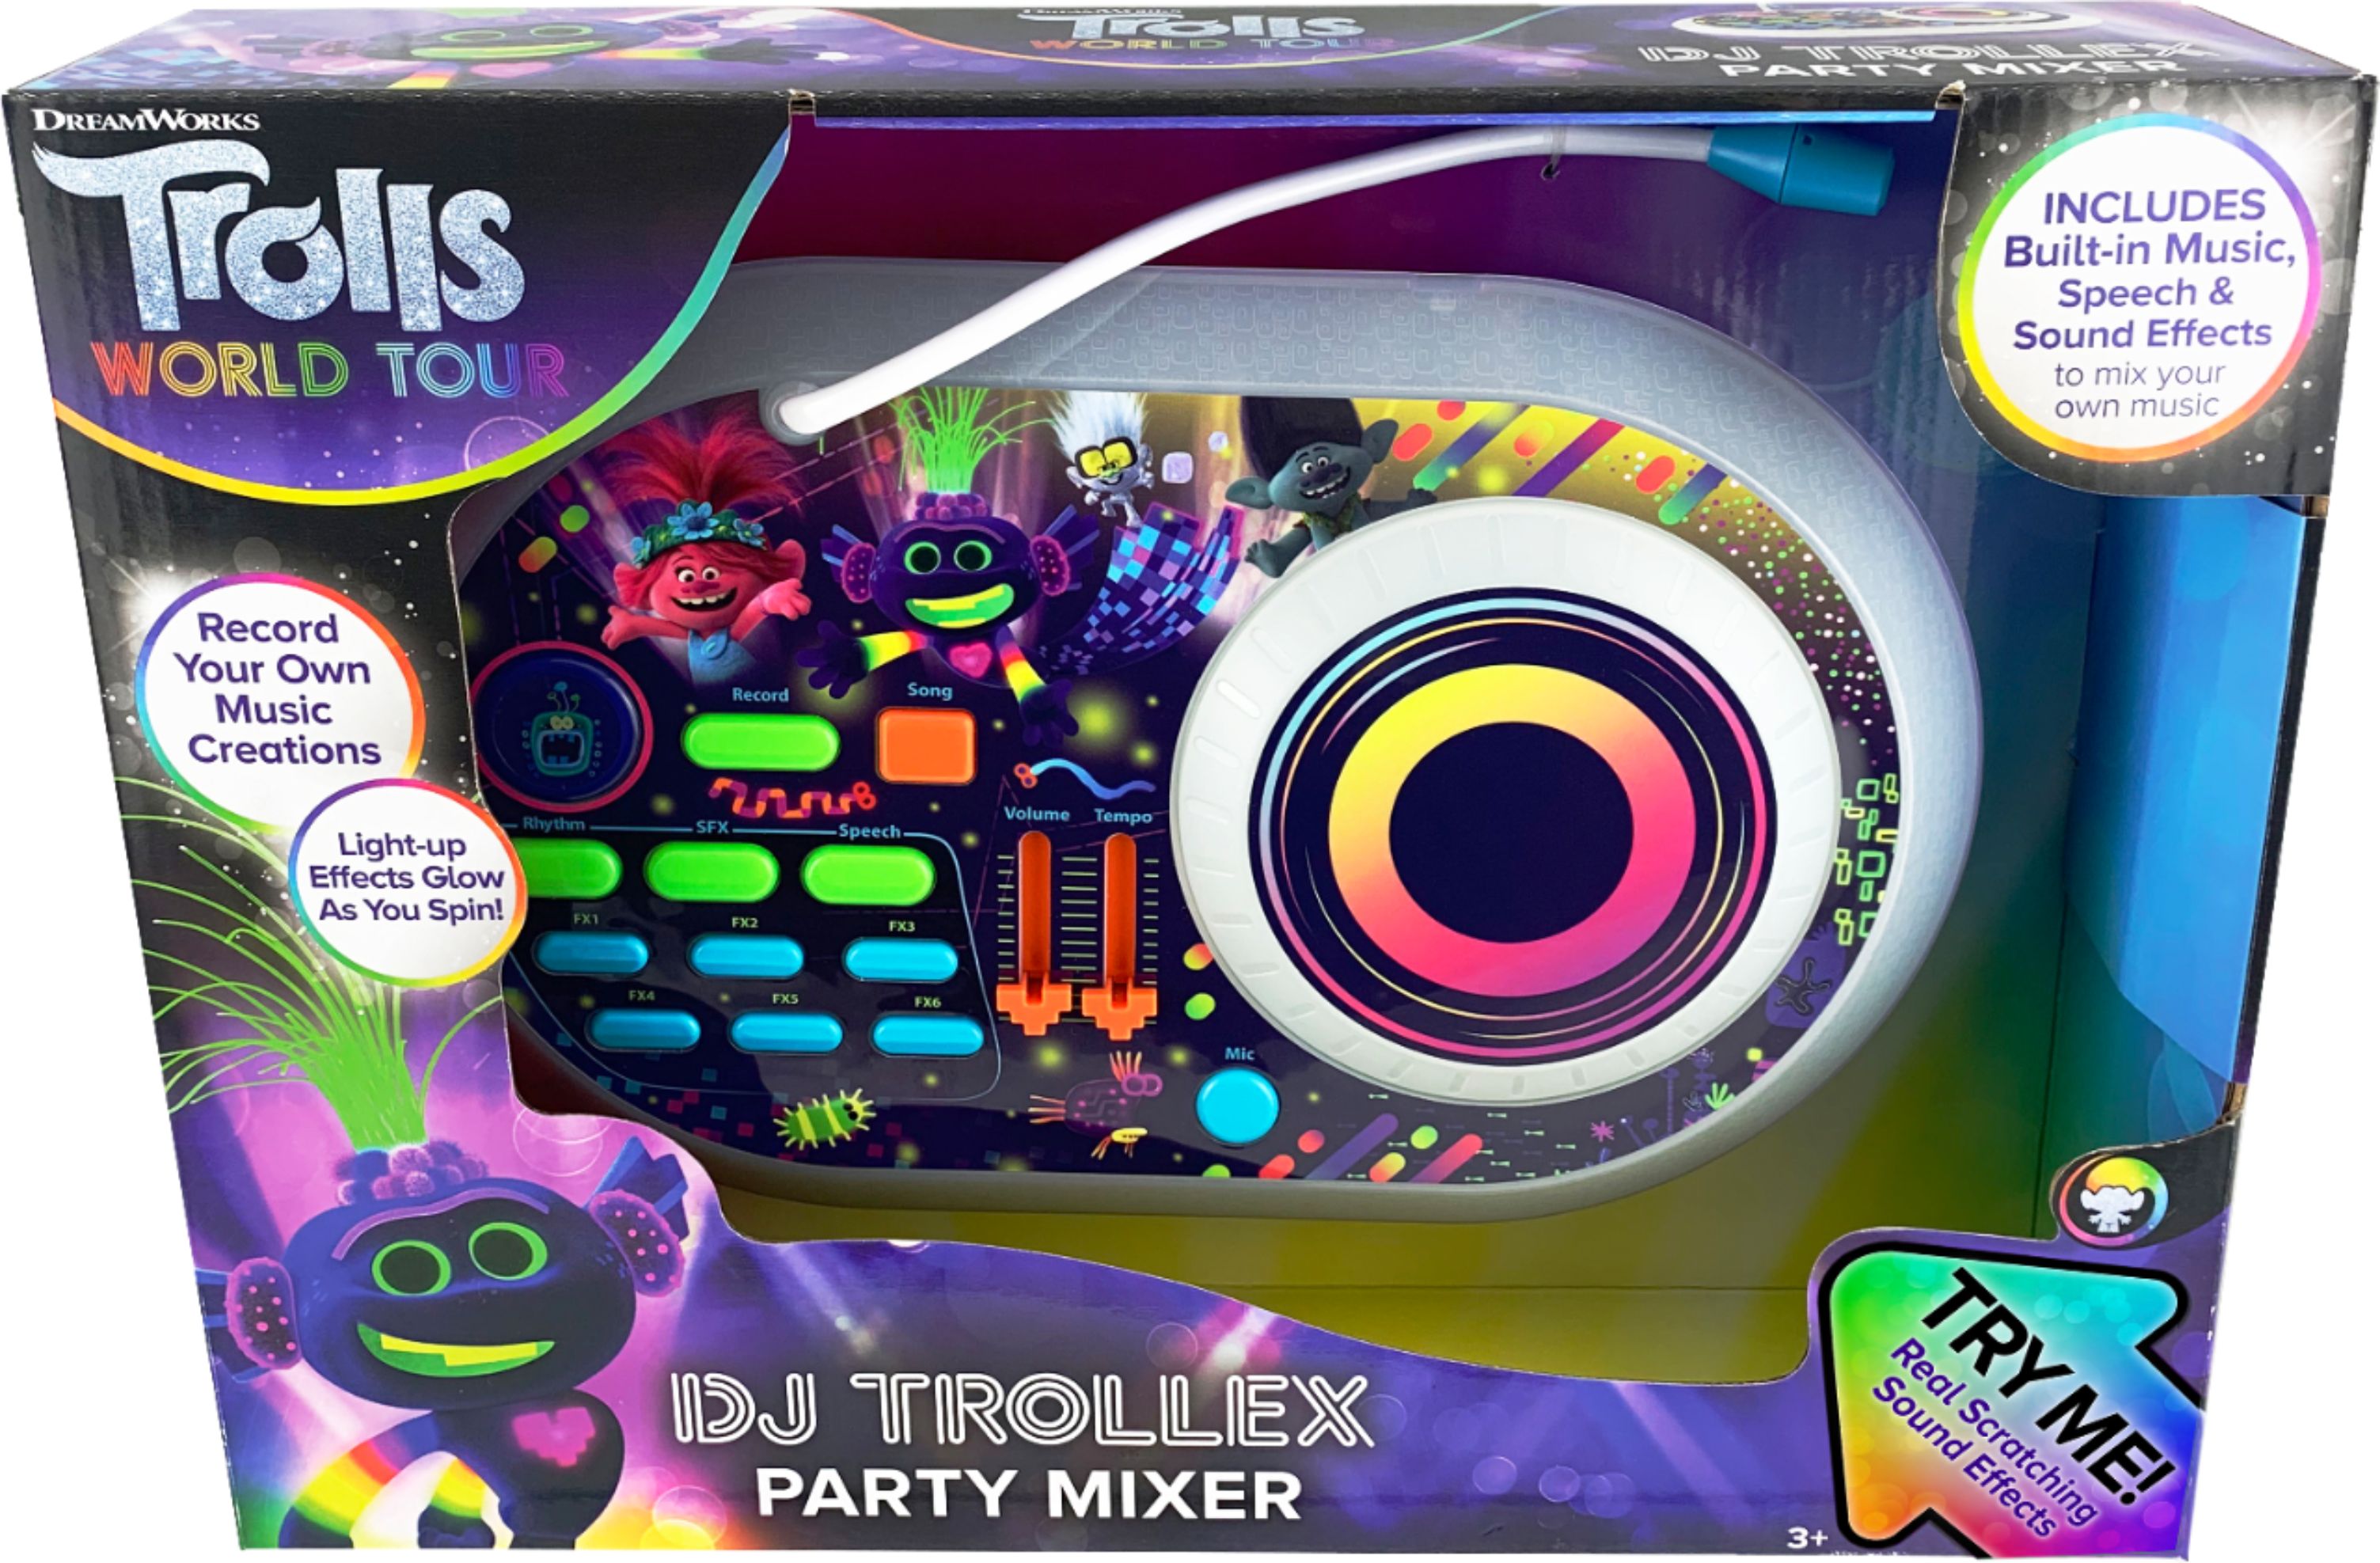 Kiddesigns Trolls World Tour Dj Trollex Party Mixer Tr 625 Emv0m Best Buy Mp3 320kbps, 6.87 mb mp3 128kbps, 2.75 mb mp3 64kbps, 1.37 mb. kiddesigns trolls world tour dj trollex party mixer